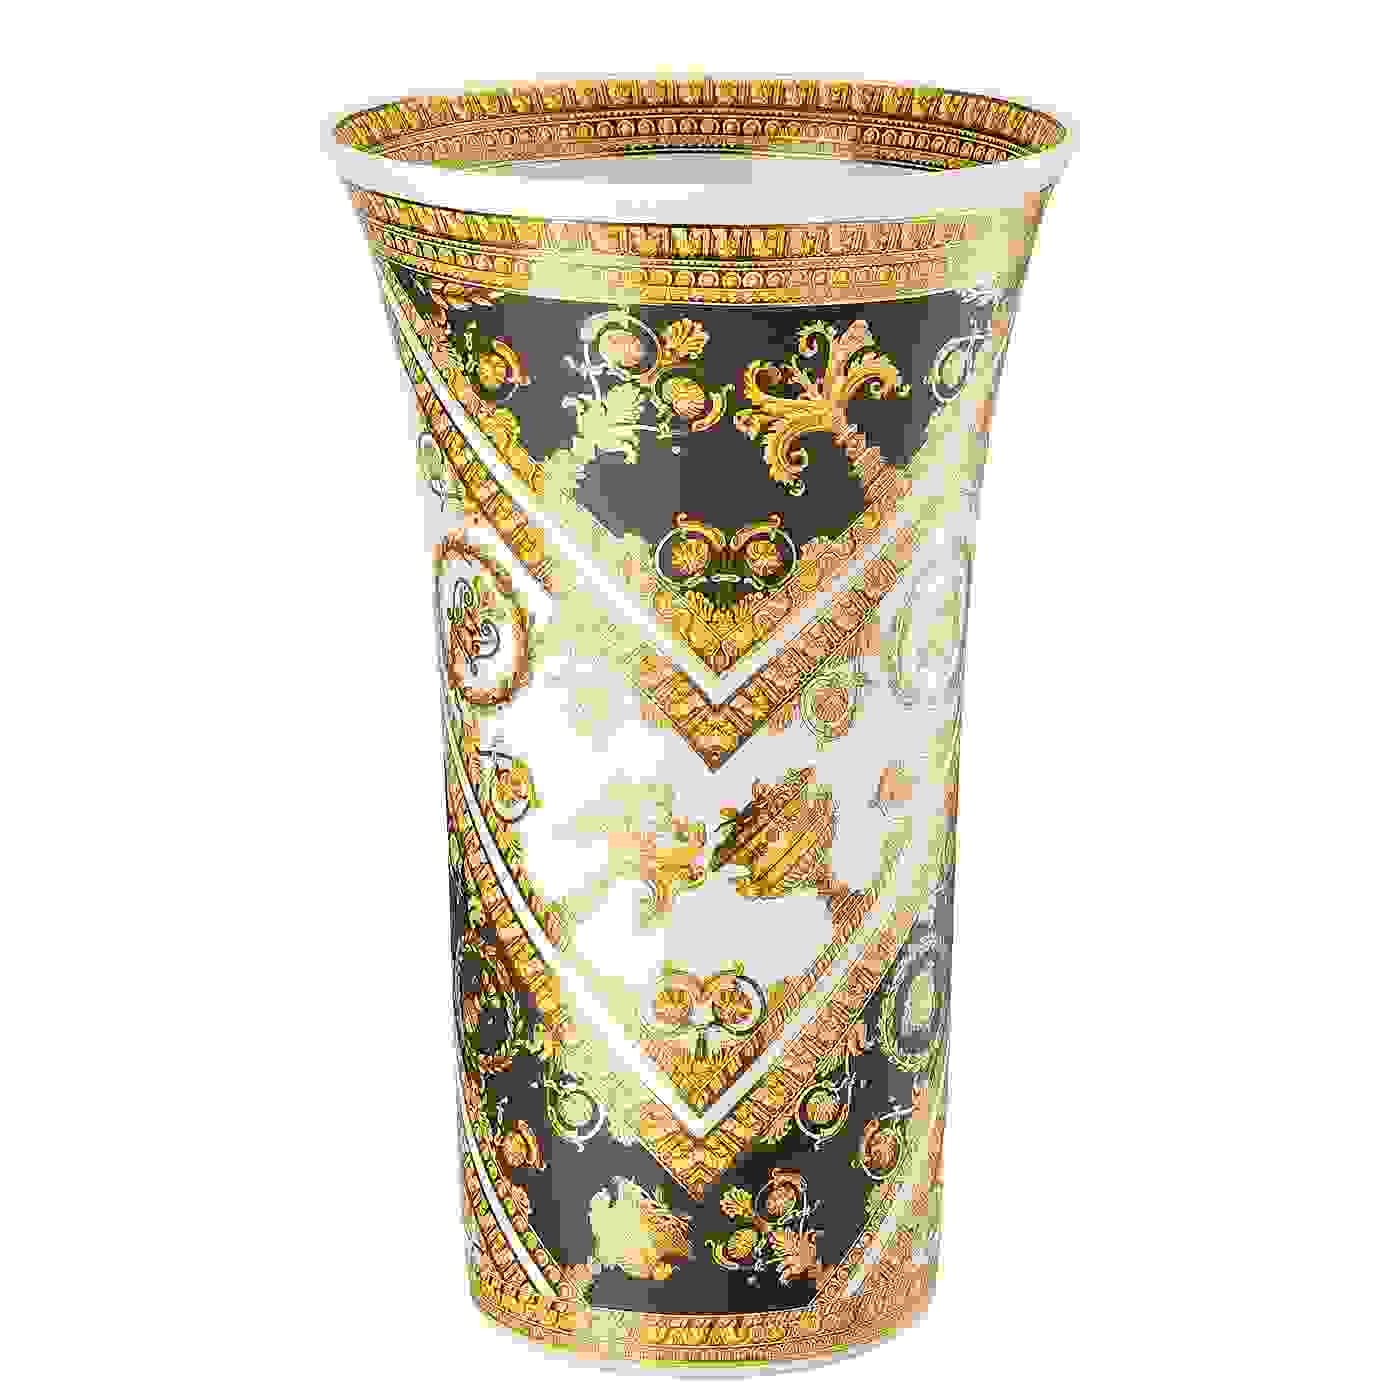 VERSACE HOME I Love Baroque Vase 34 cm